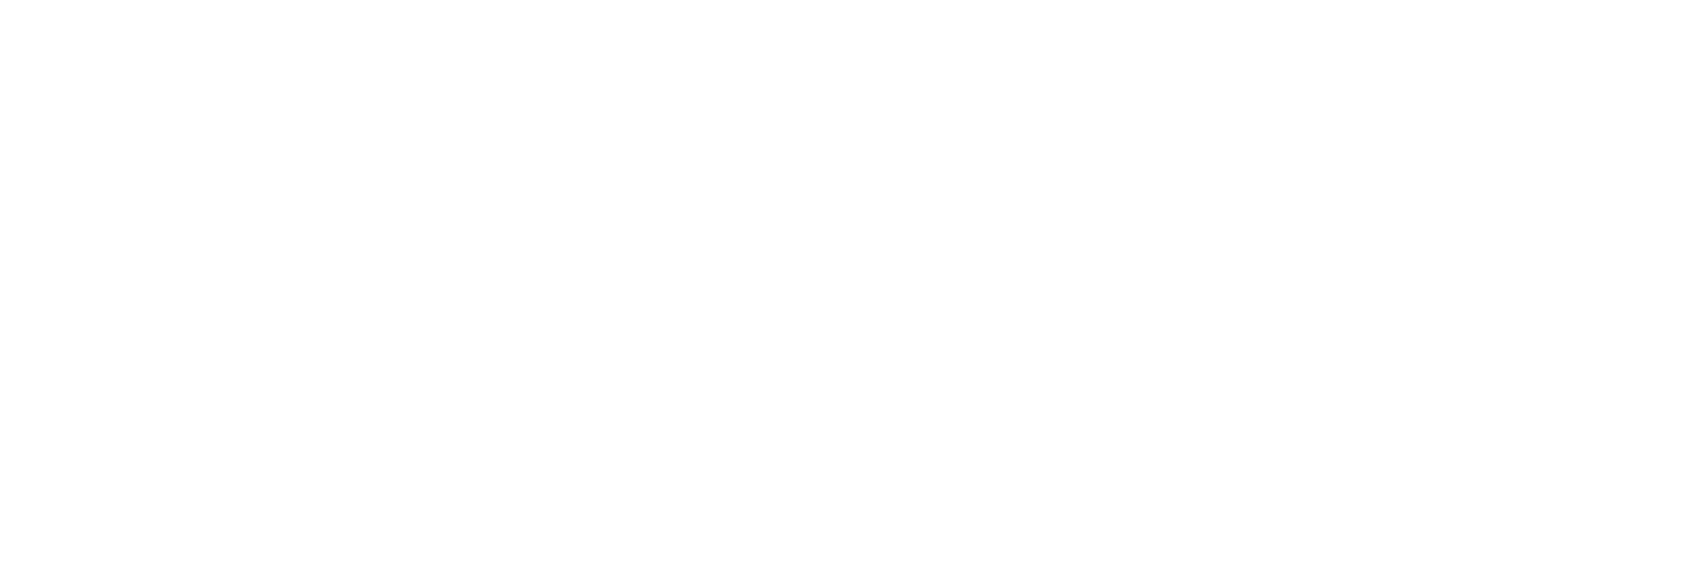 E M E GARAGE Logo